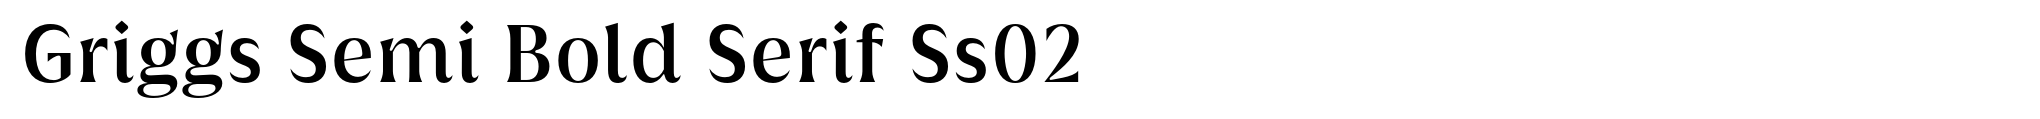 Griggs Semi Bold Serif Ss02 image